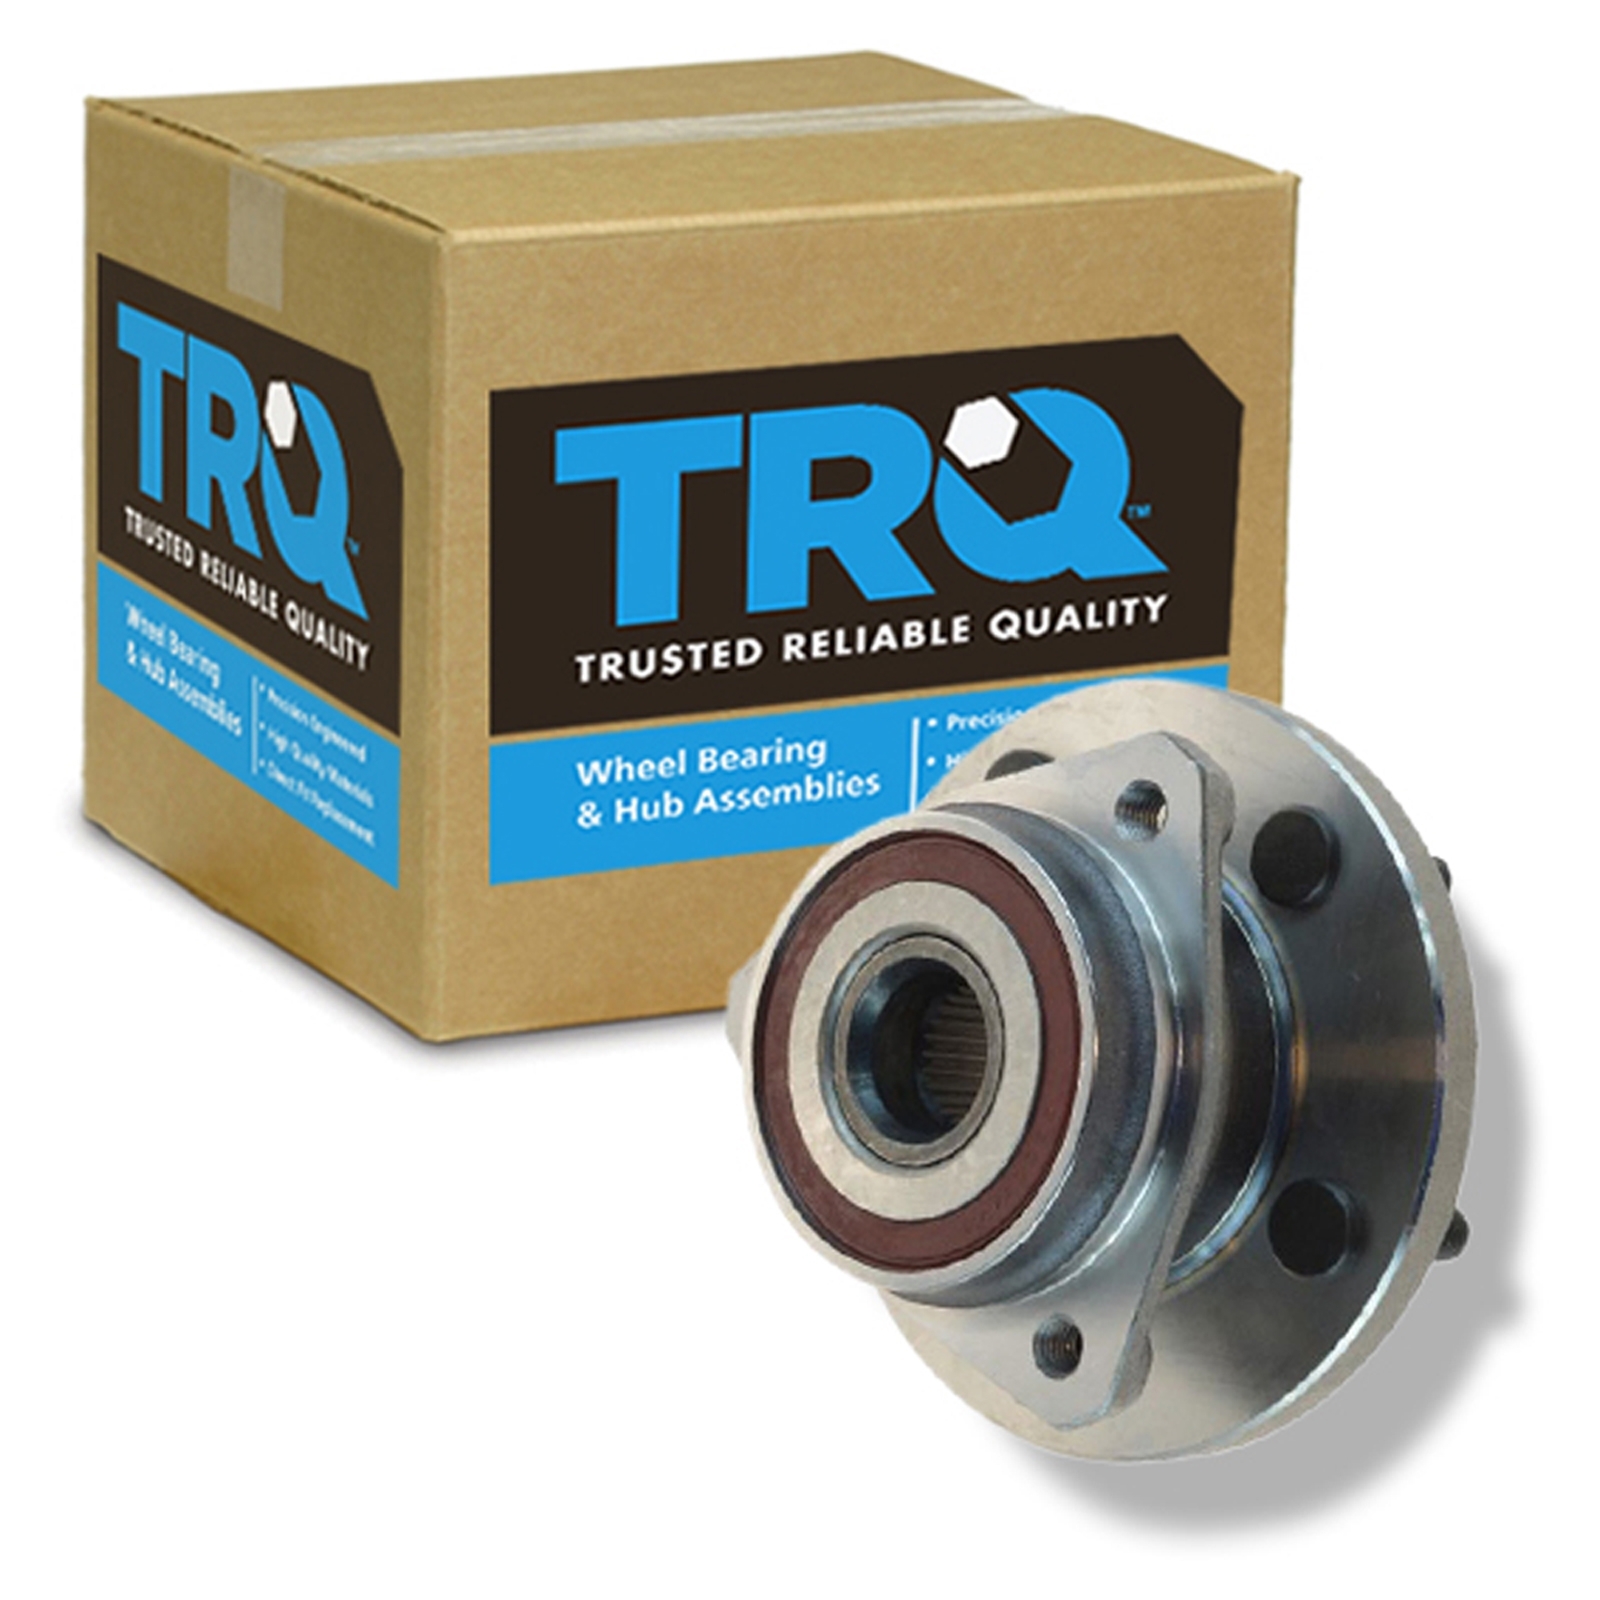 Trq Wheel Bearing & Hub Assembly For 99-04 Grand Cherokee Front Driver Or Passenger Side,